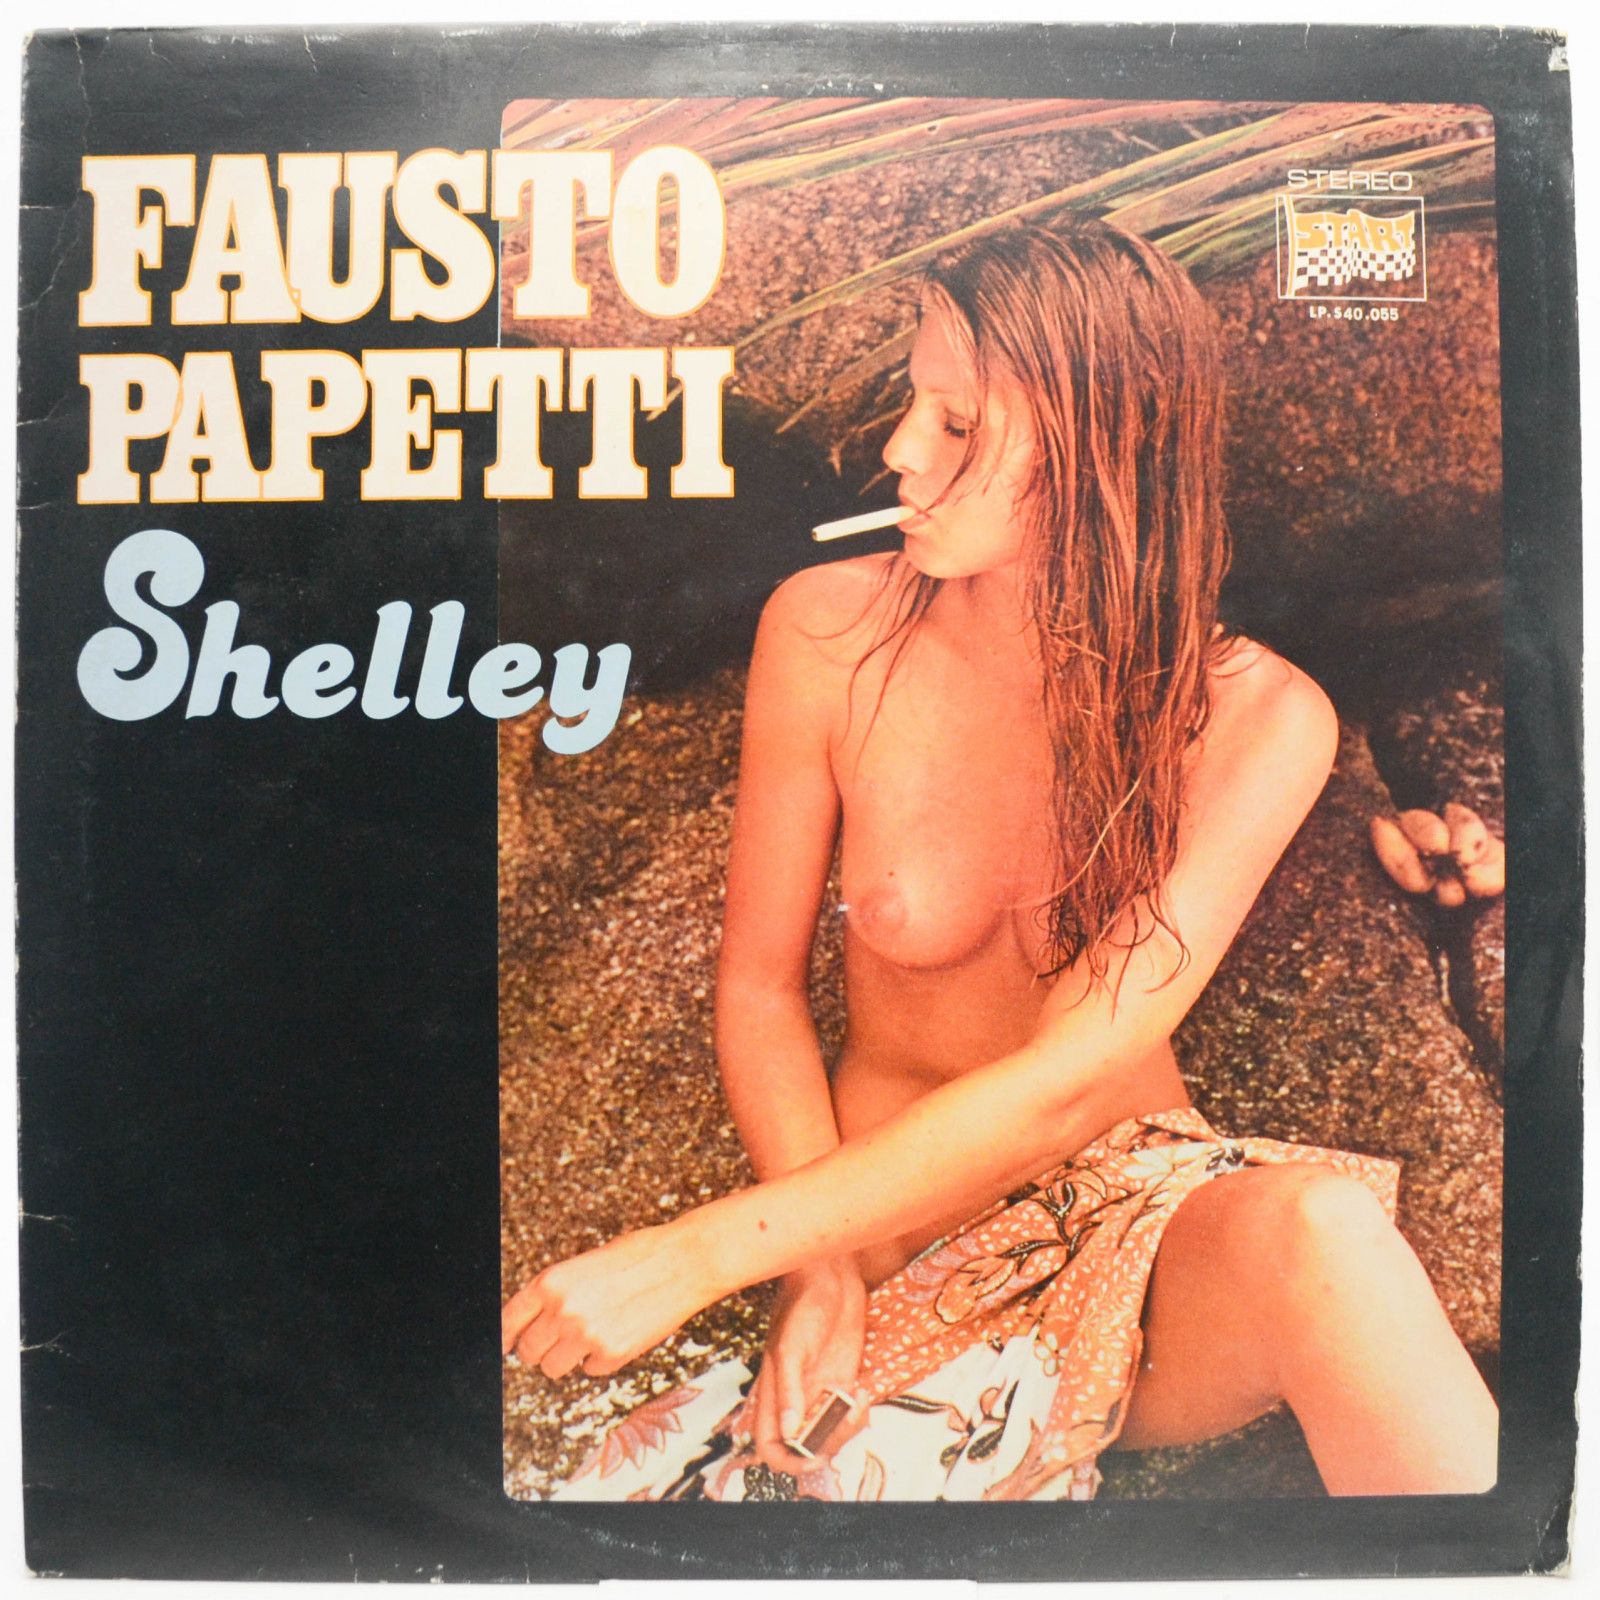 Fausto Papetti — Shelley (1-st, Italy), 1978